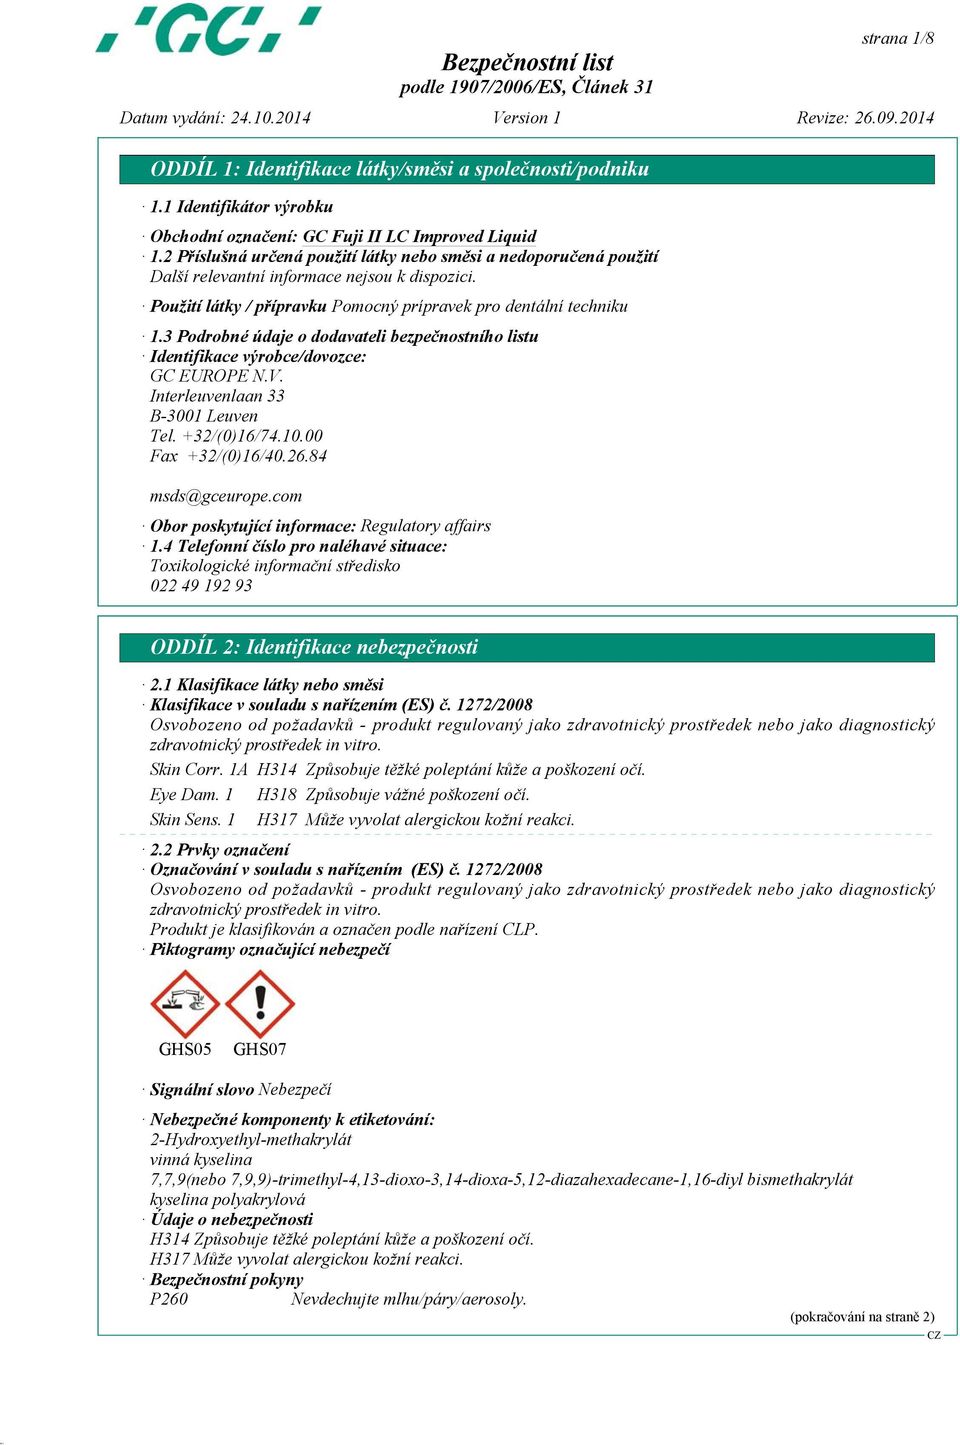 3 Podrobné údaje o dodavateli bezpečnostního listu Identifikace výrobce/dovozce: GC EUROPE N.V. Interleuvenlaan 33 B-3001 Leuven Tel. +32/(0)16/74.10.00 Fax +32/(0)16/40.26.84 msds@gceurope.